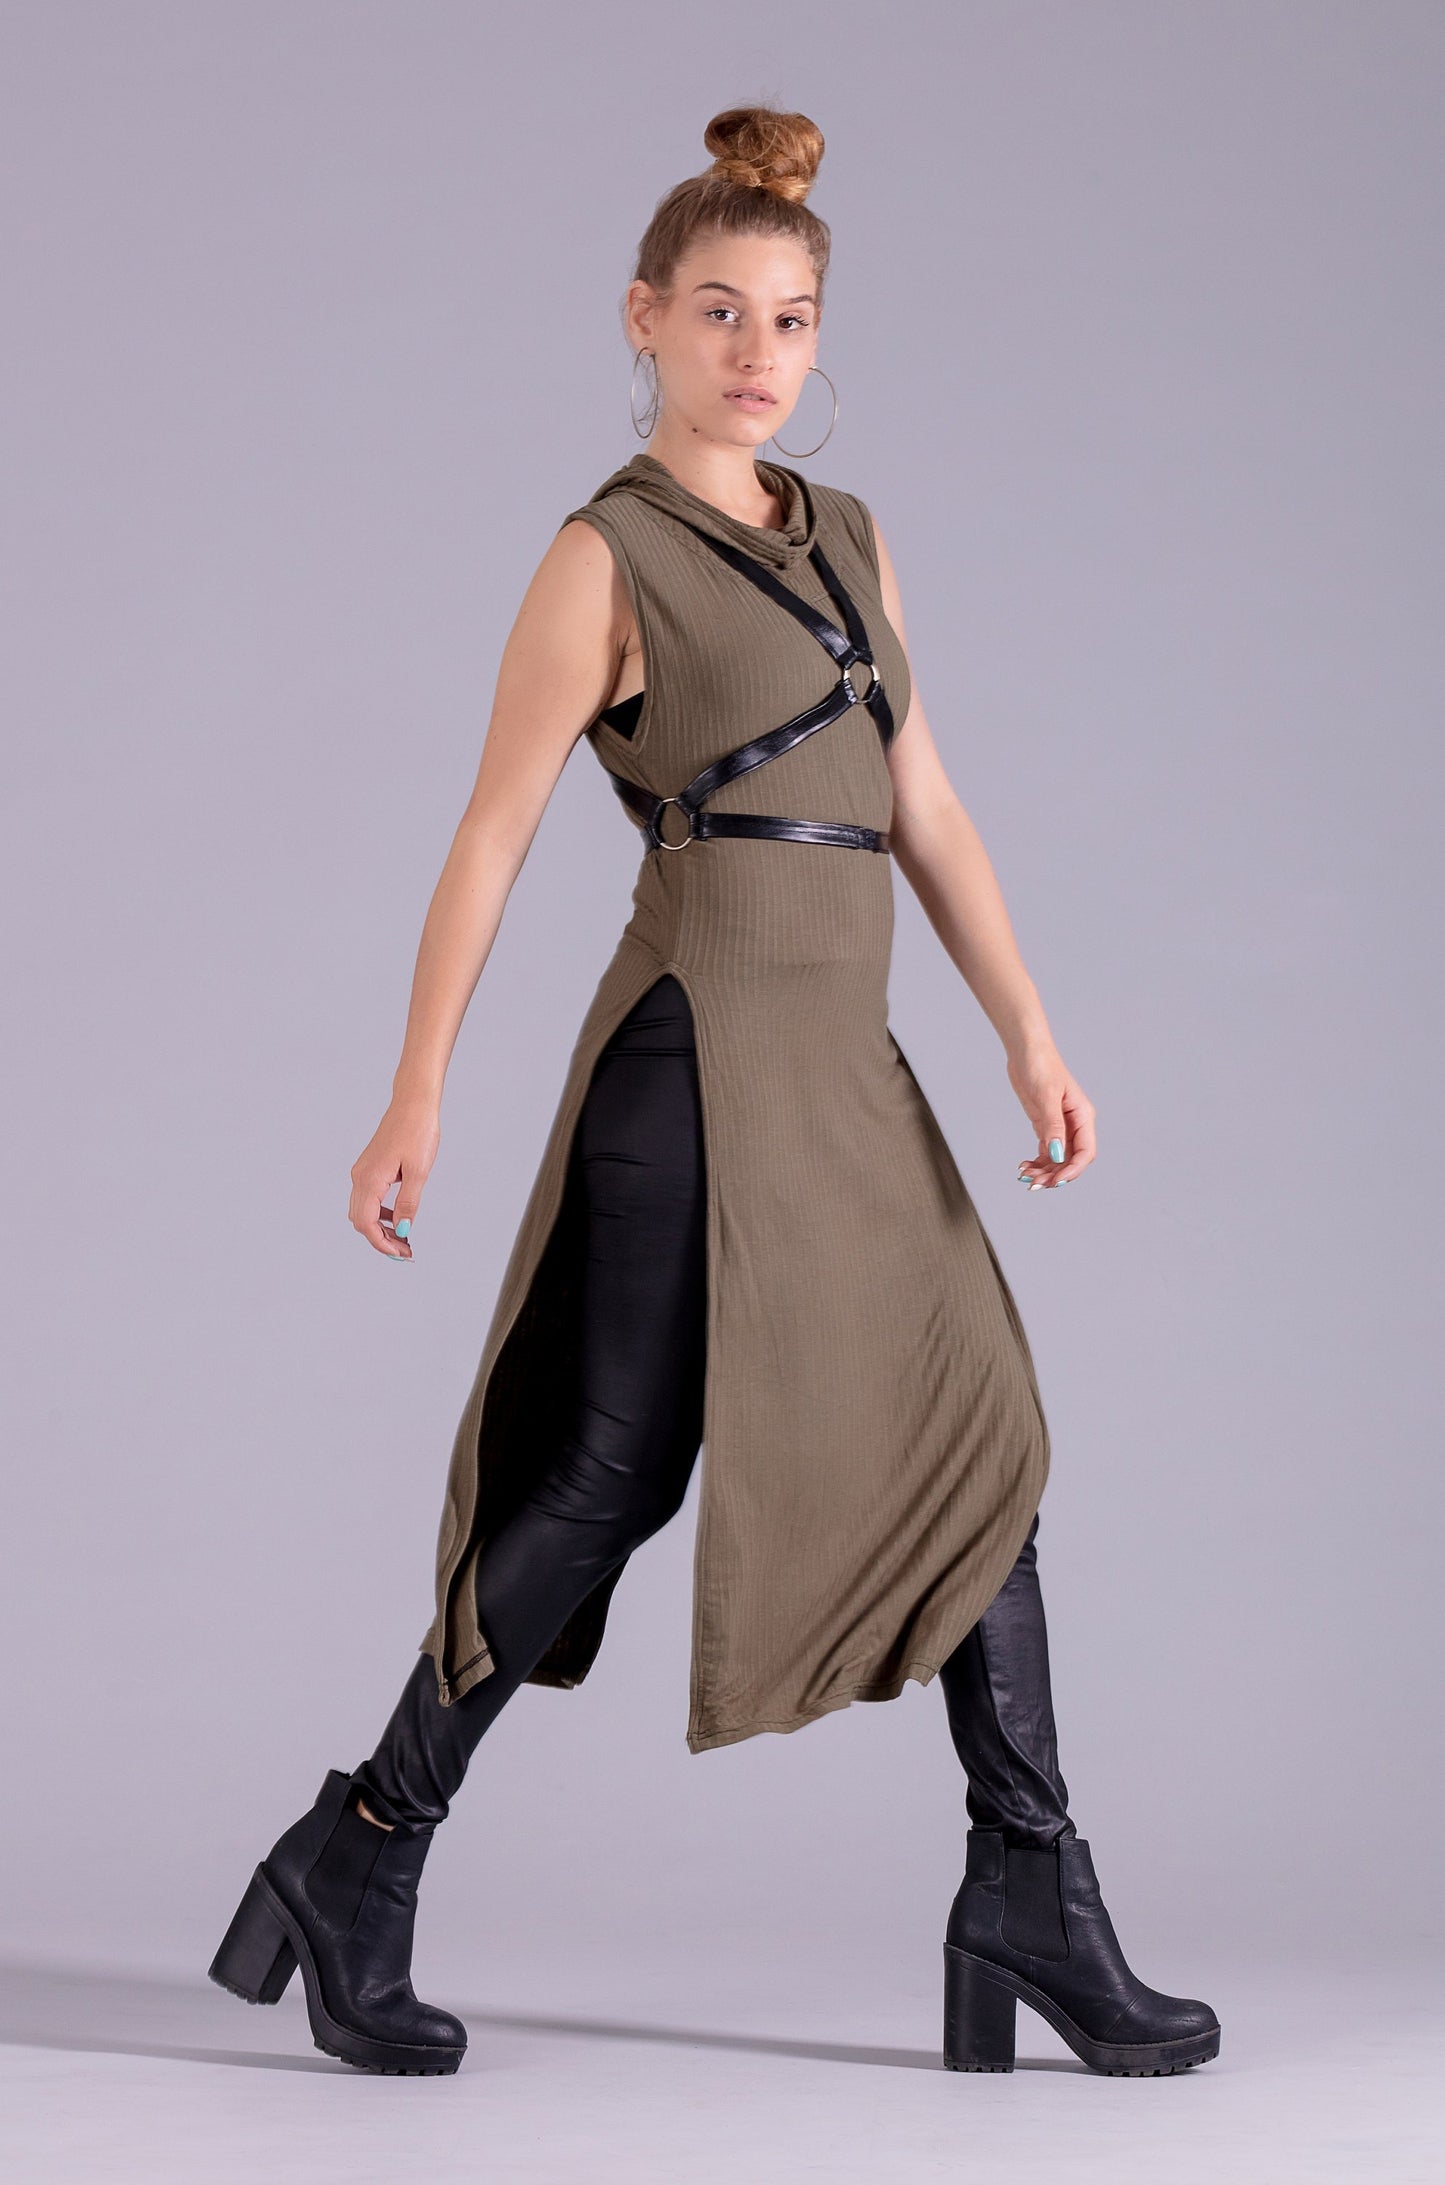 Warrior post apocalyptic hooded tunic dress | Charcoal Gray